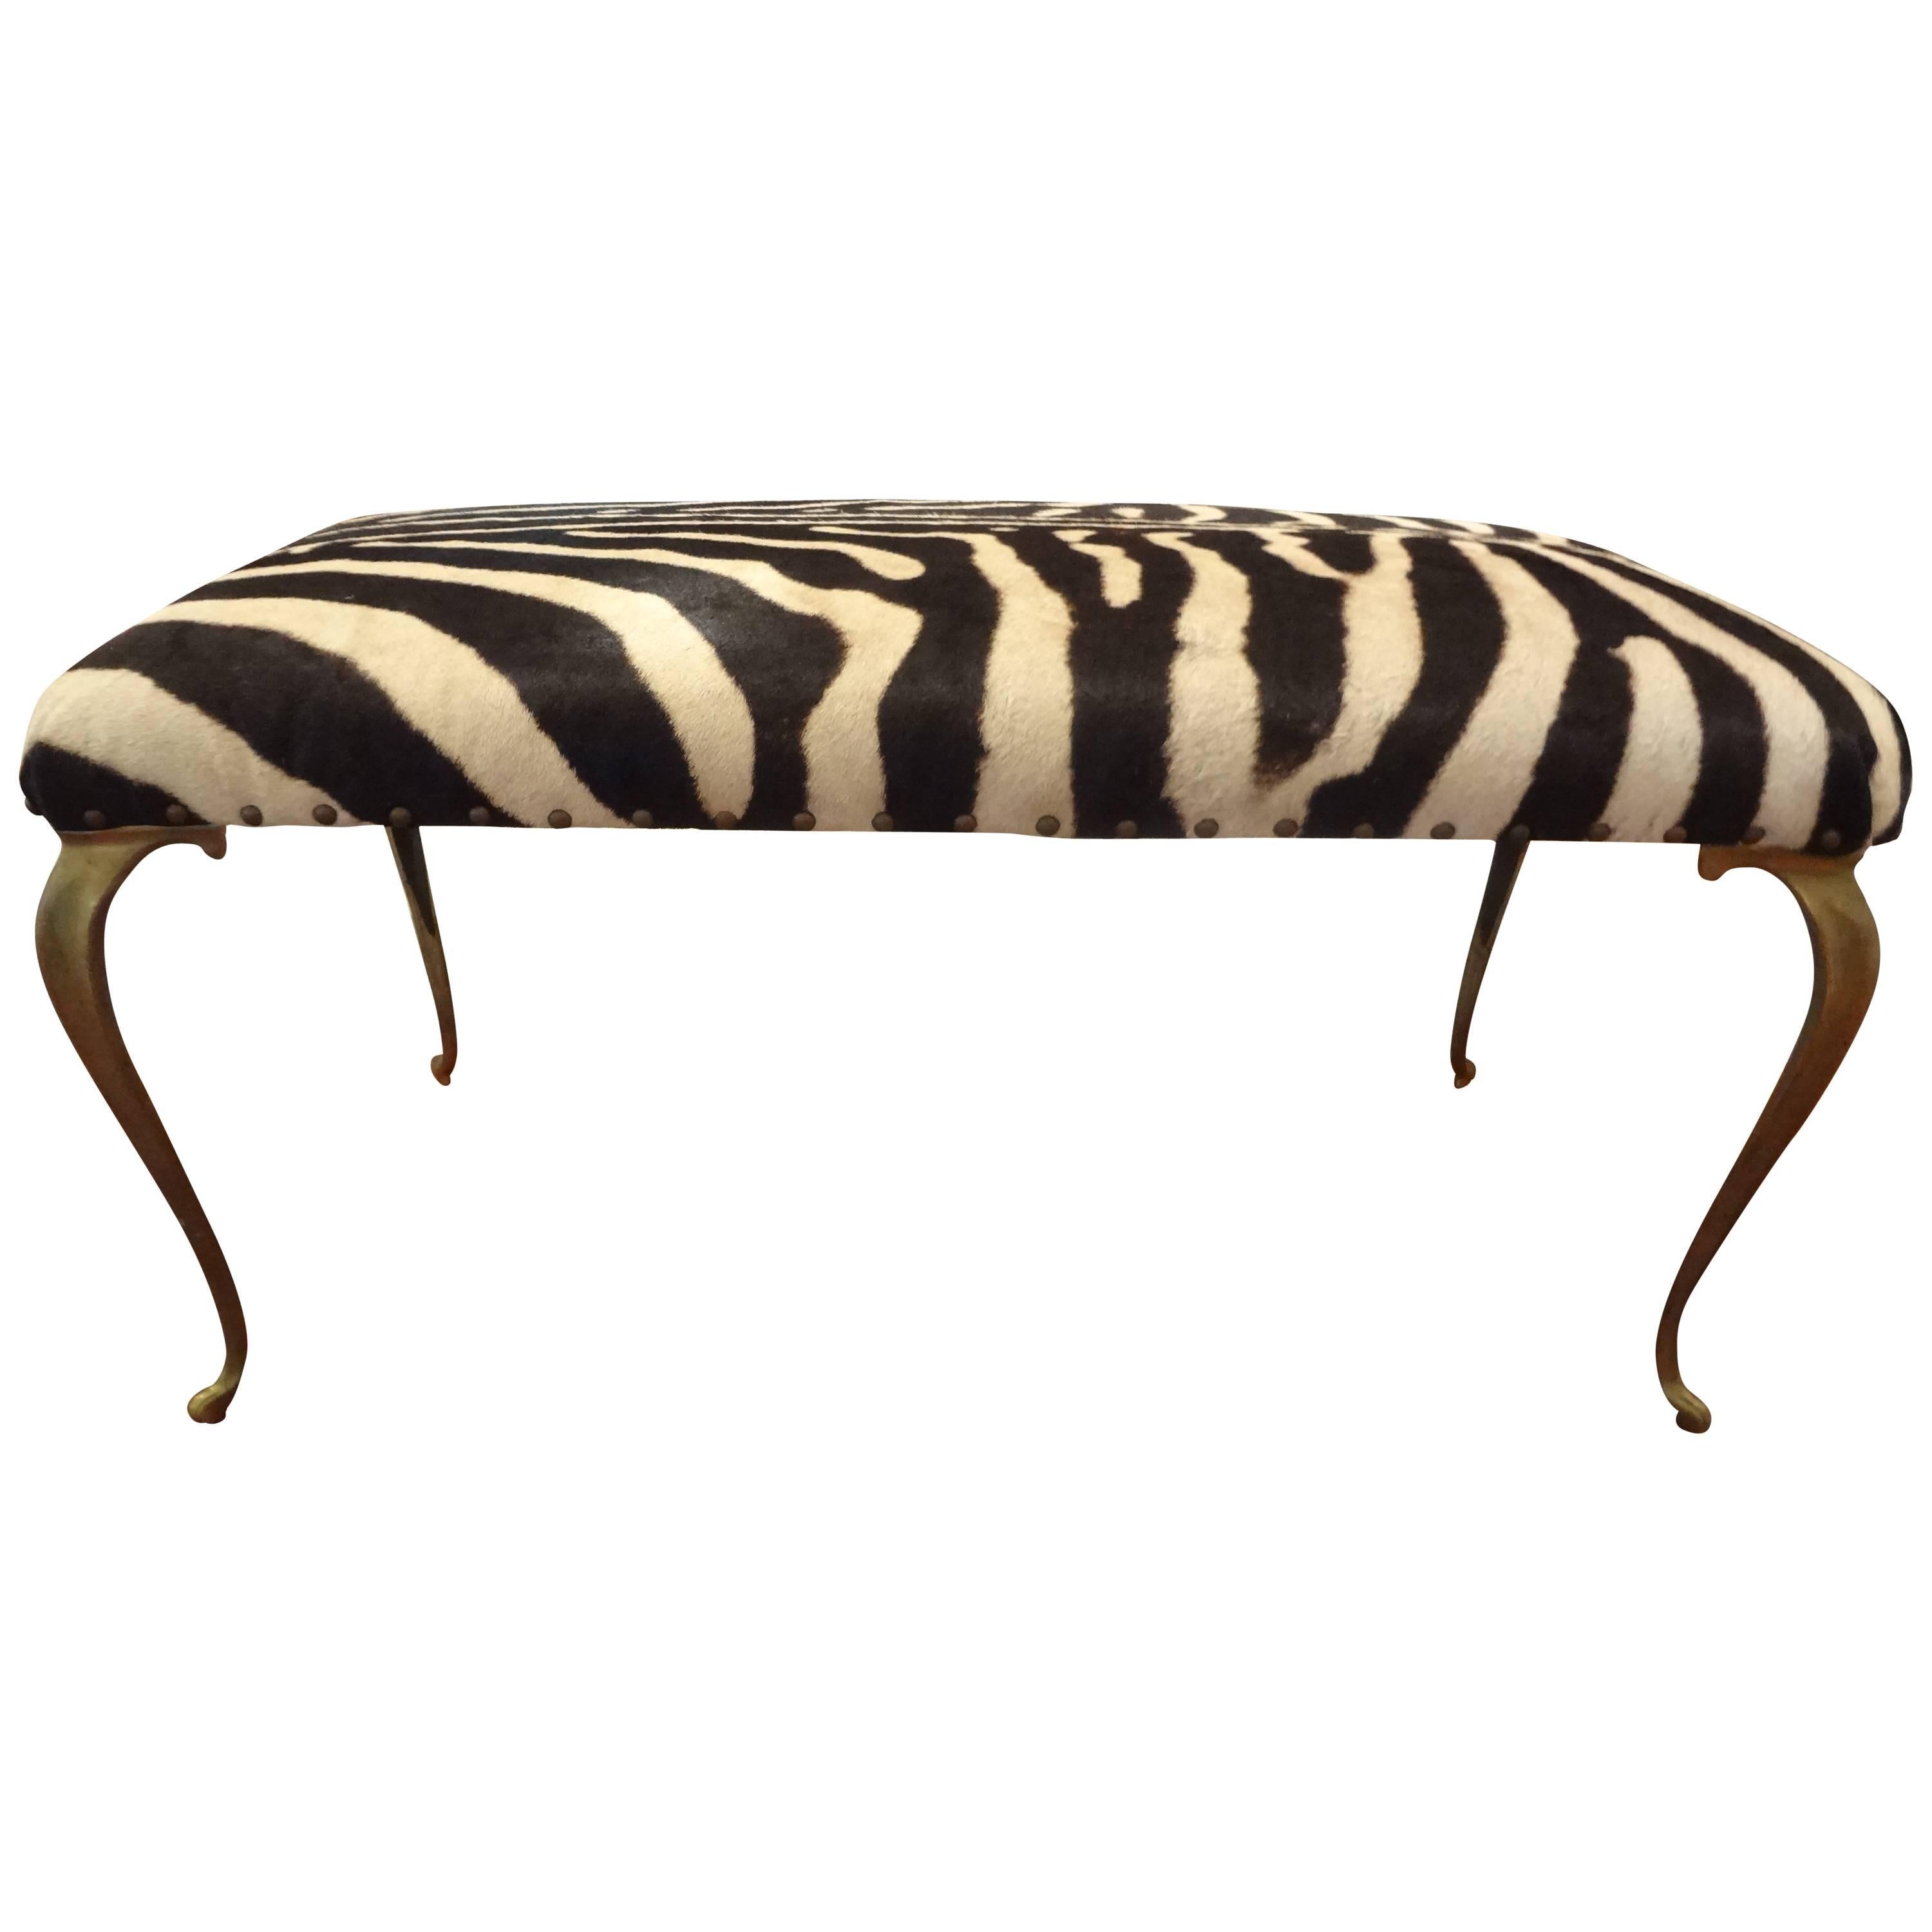 Italian Brass Bench Upholstered in Zebra Hide